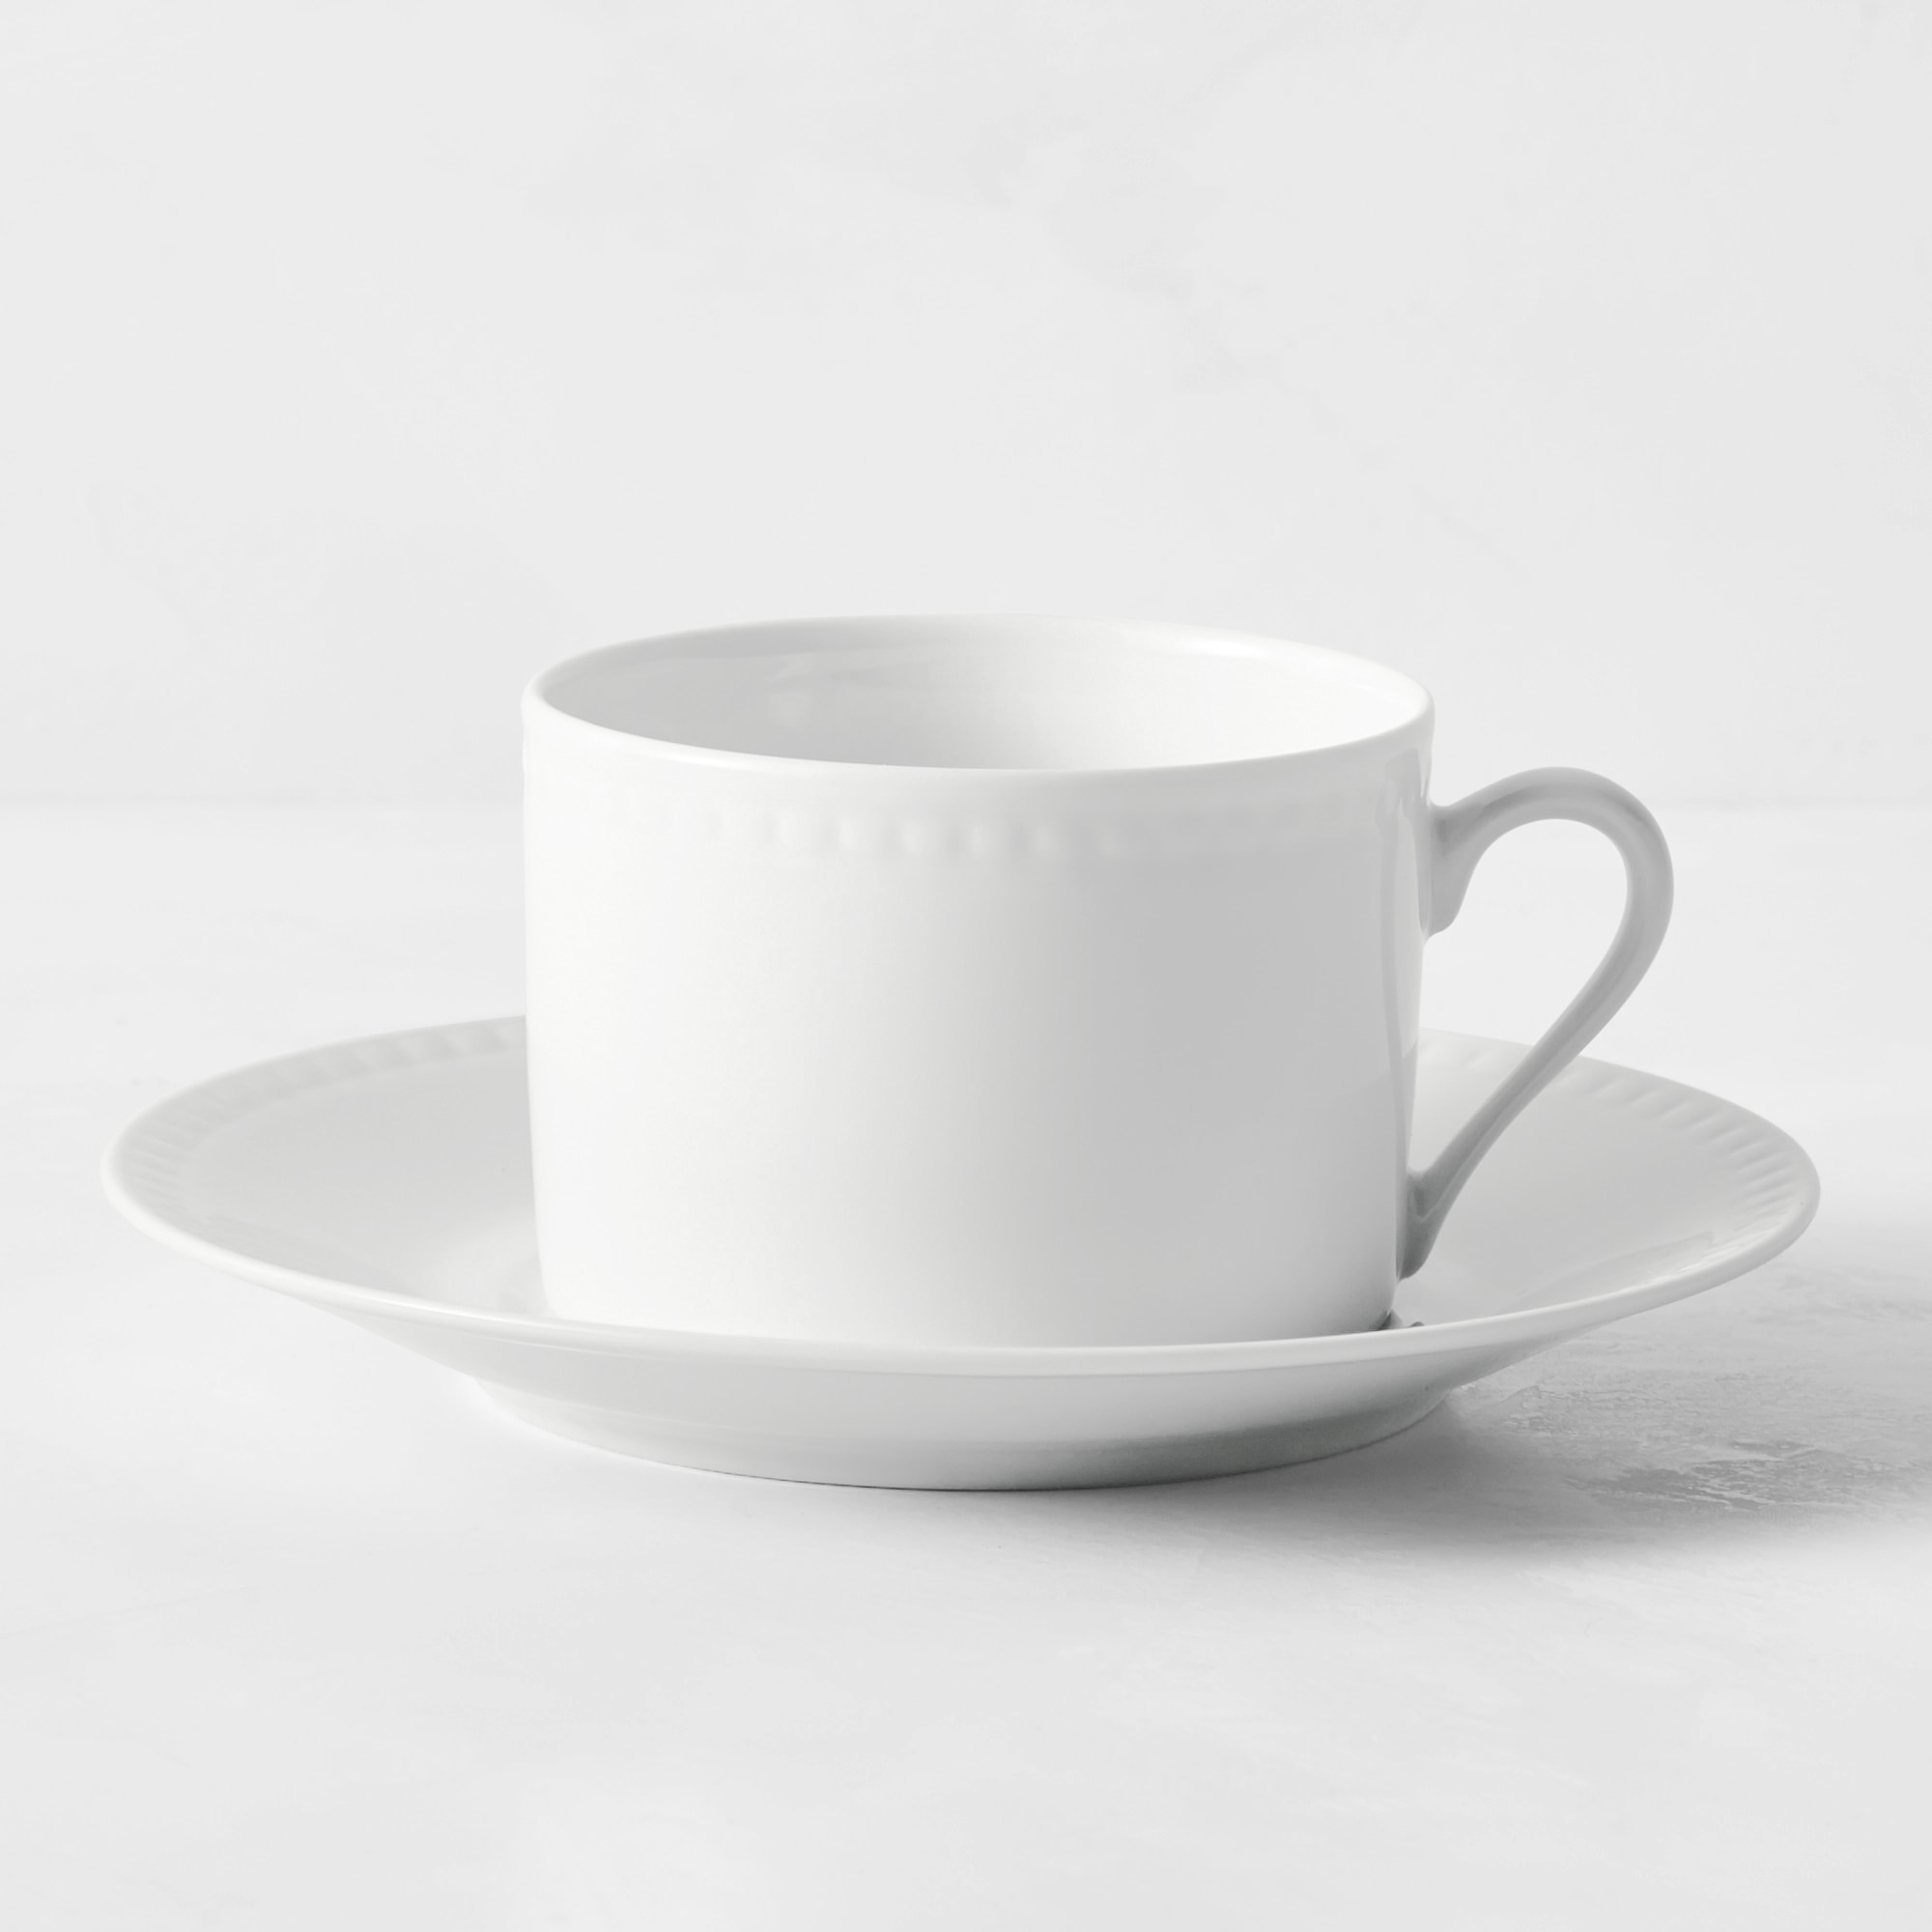 Apilco Beaded Hemstitch Porcelain Cups & Saucers